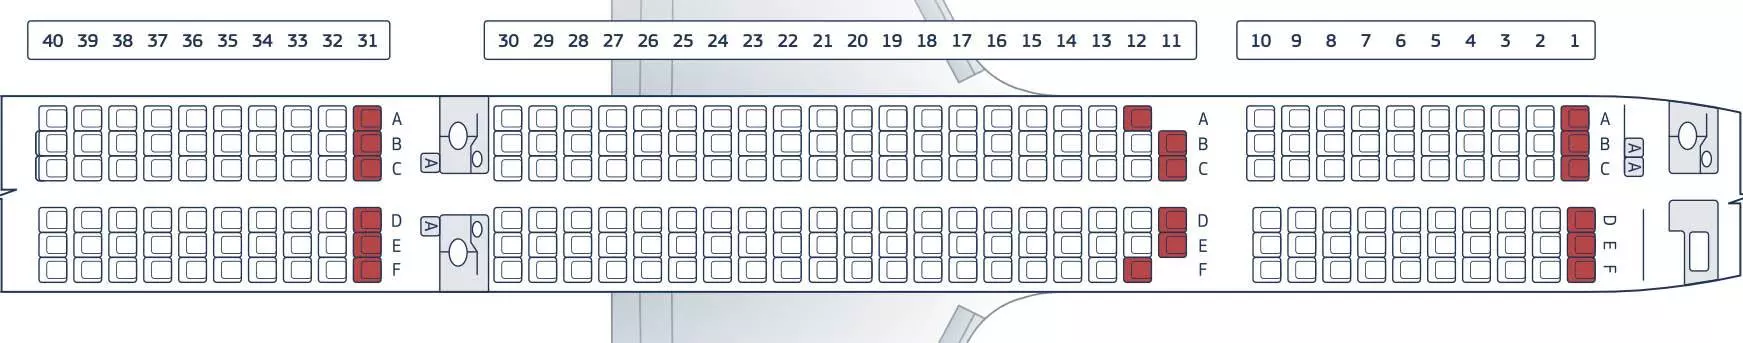 Боинг 757 200: схема салона и лучшие места